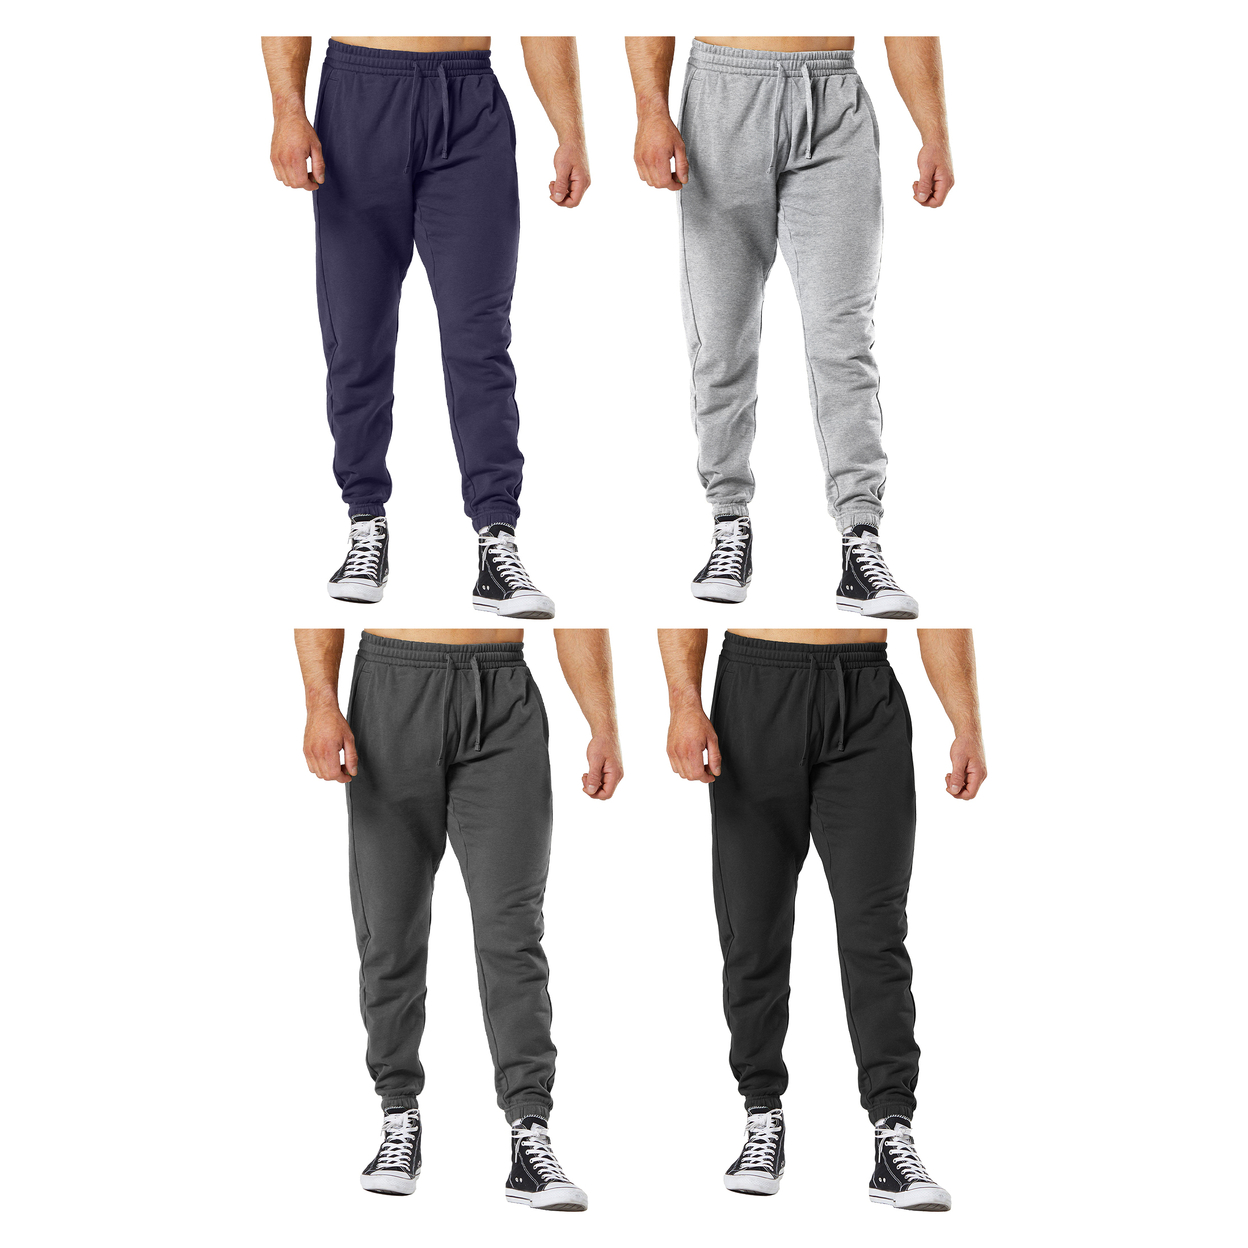 3-Pack: Men's Ultra-Soft Cozy Winter Warm Casual Fleece-Lined Sweatpants Jogger - Medium